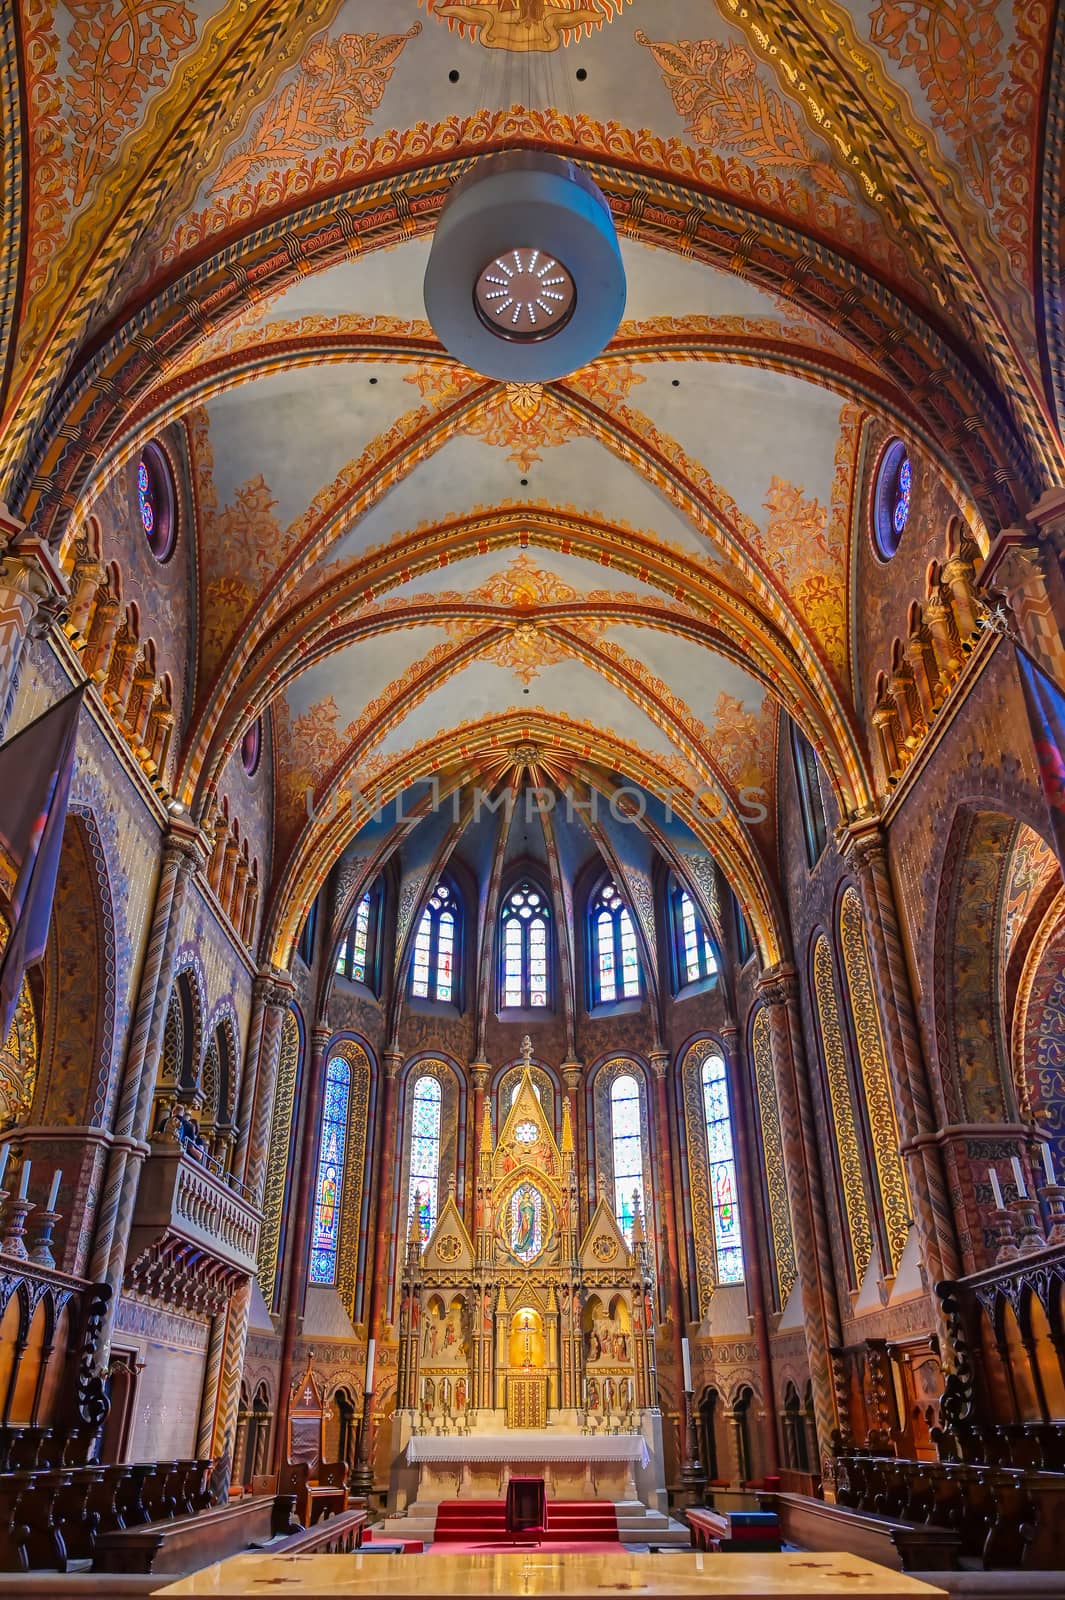 Matthias Church in Budapest, Hungary by jbyard22